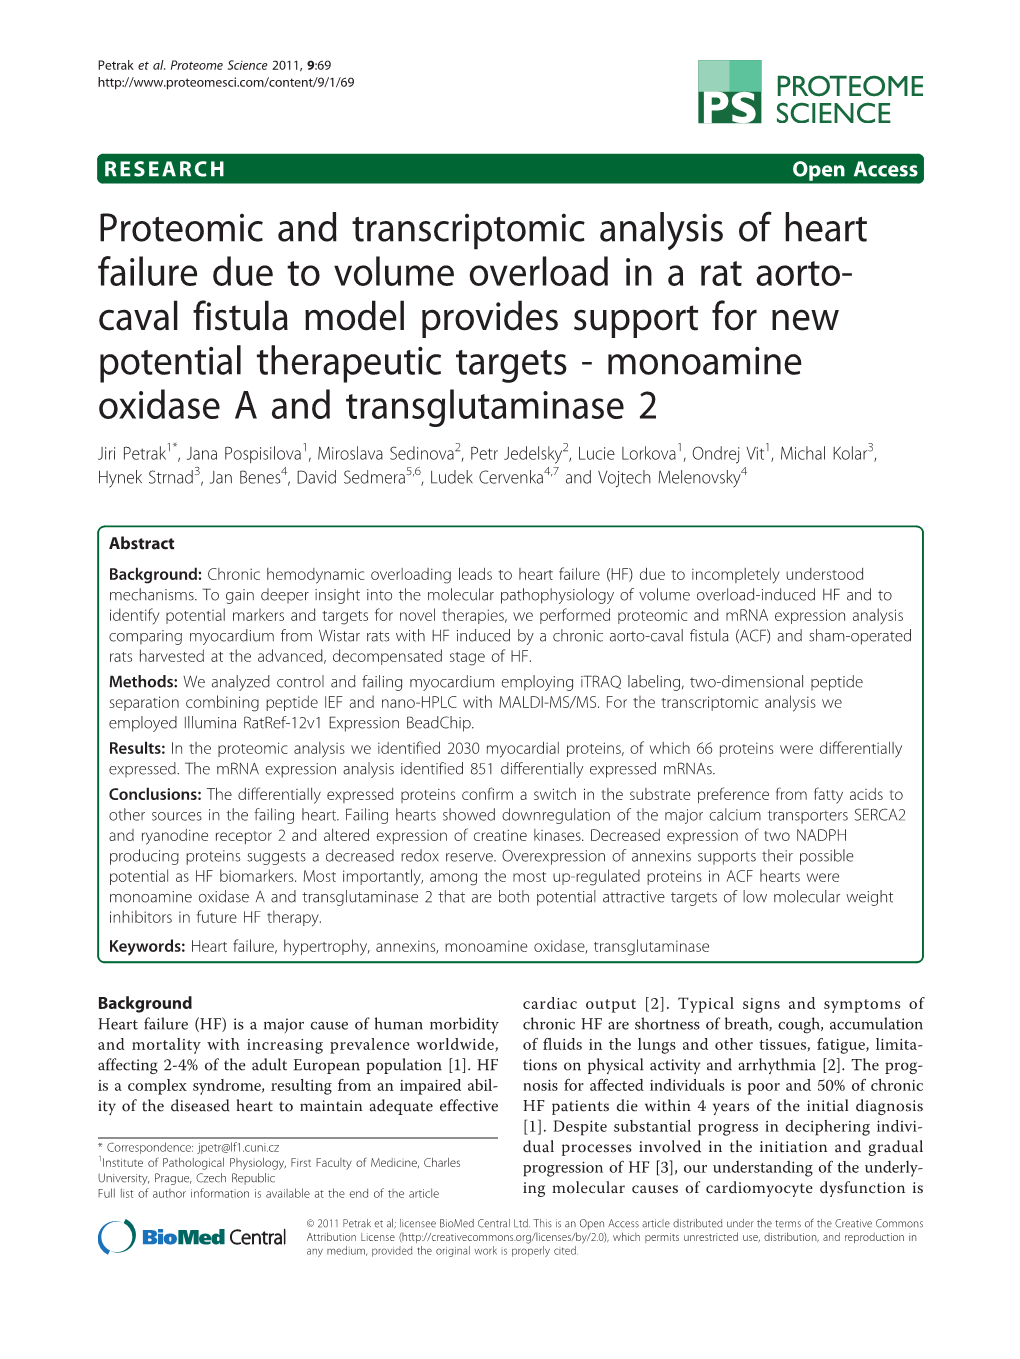 Proteomic and Transcriptomic Analysis of Heart Failure